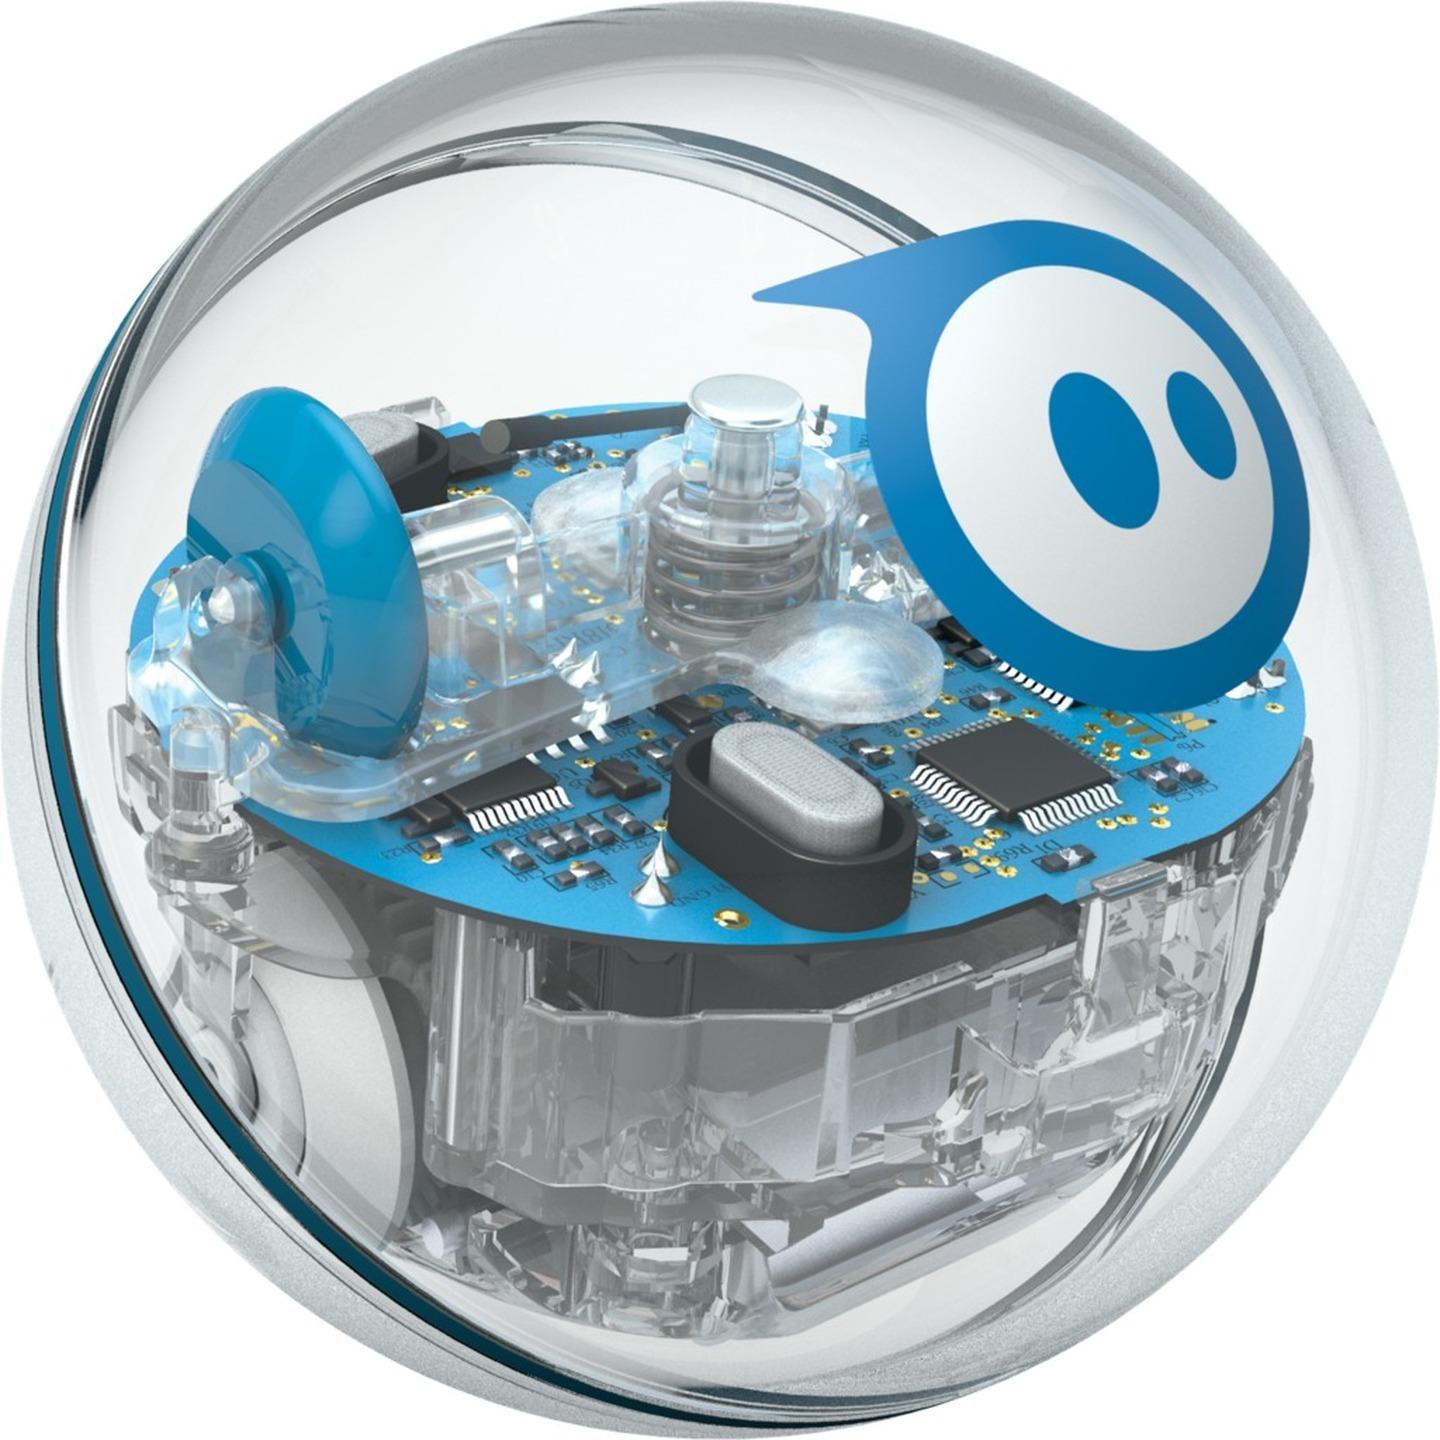 Sphero SPRK Programmable Robot in a Ball